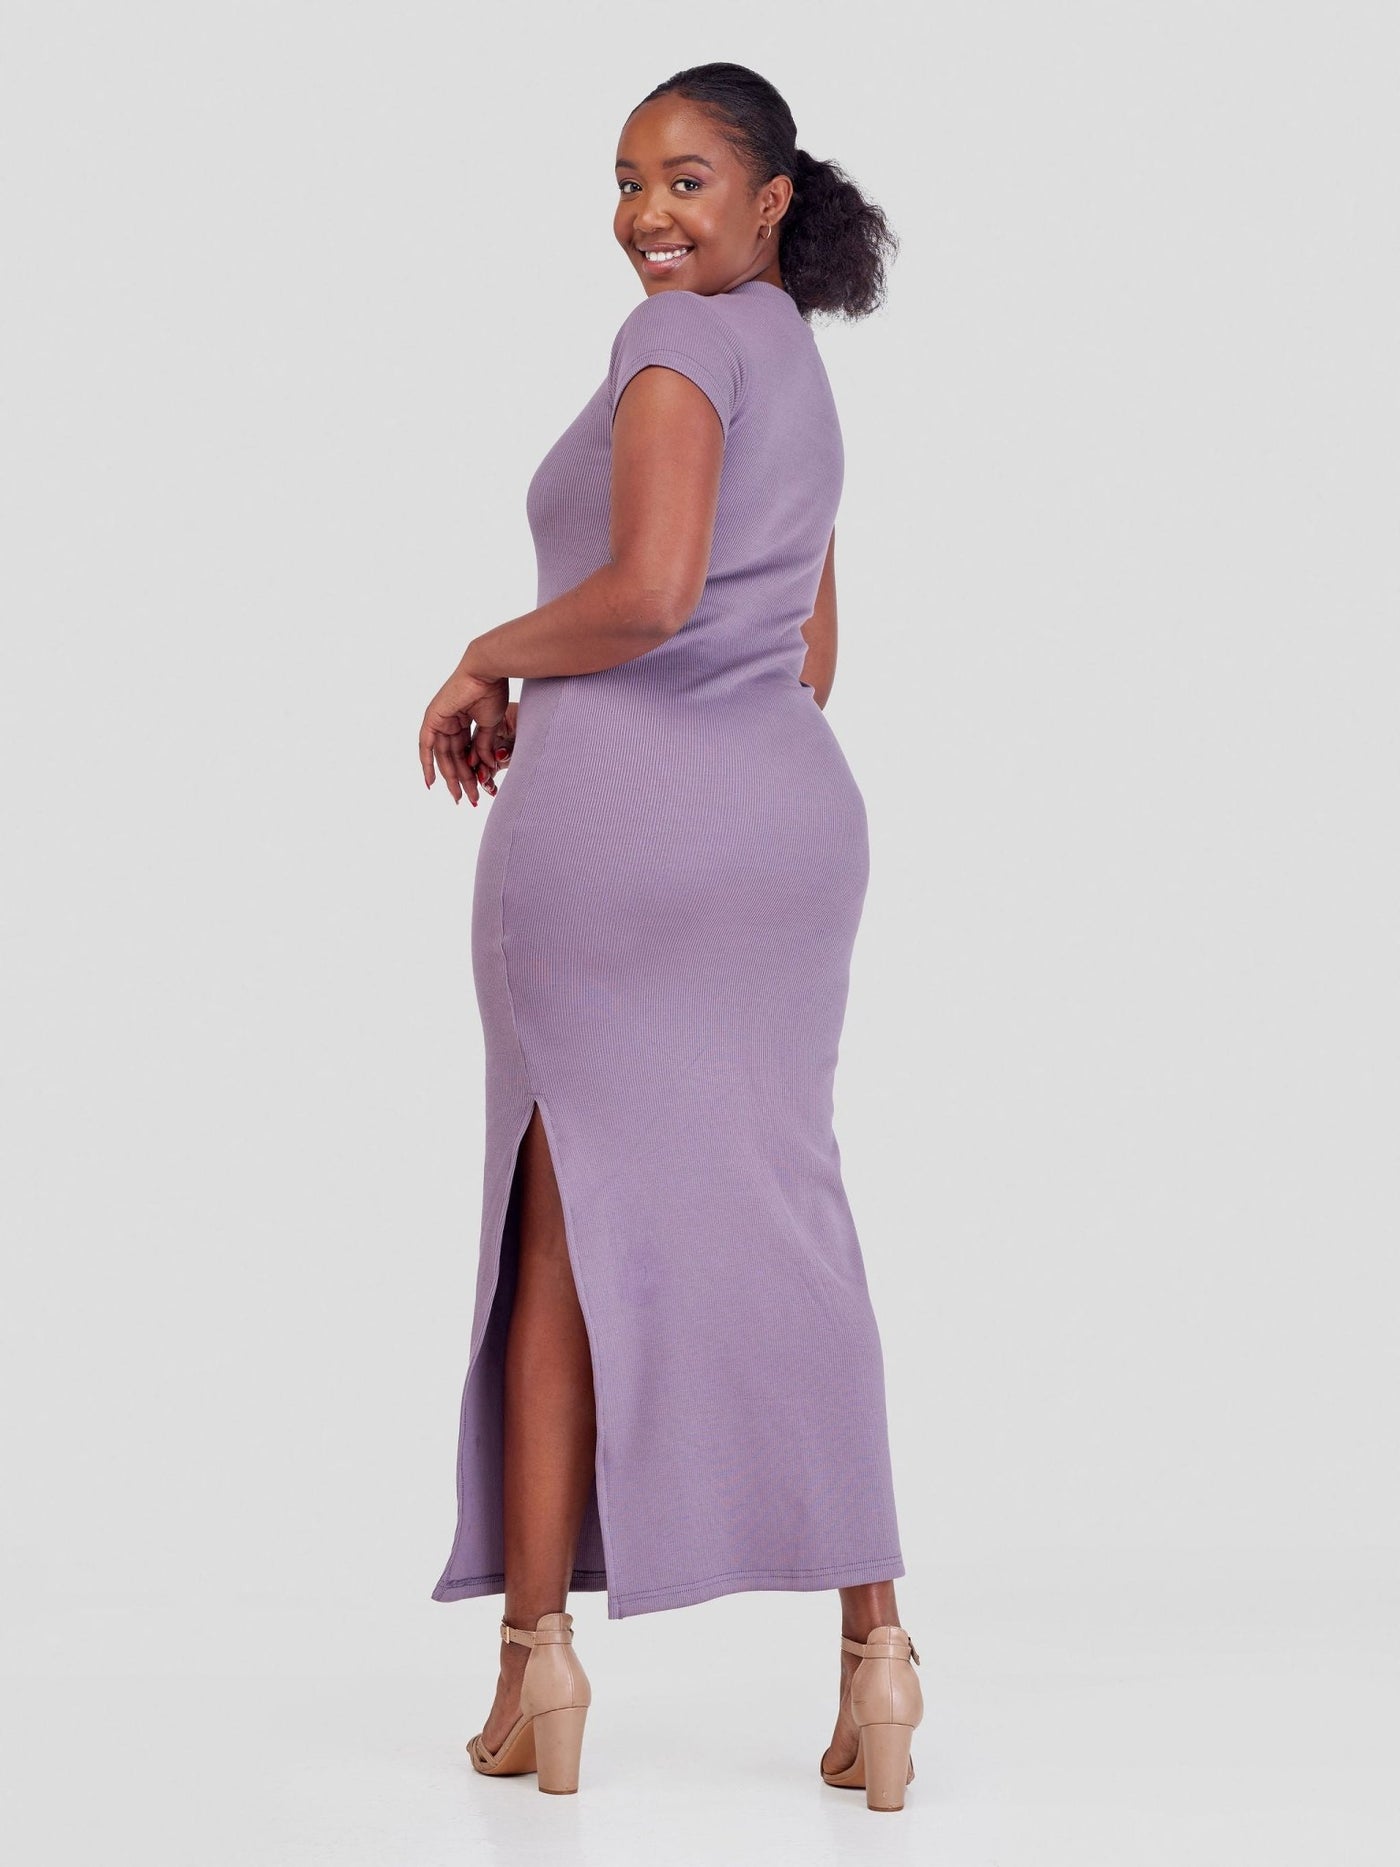 Zia Africa ''Sweat Pea'' Bodycon Ribbed Maxi Dress - Lilac - Shopzetu